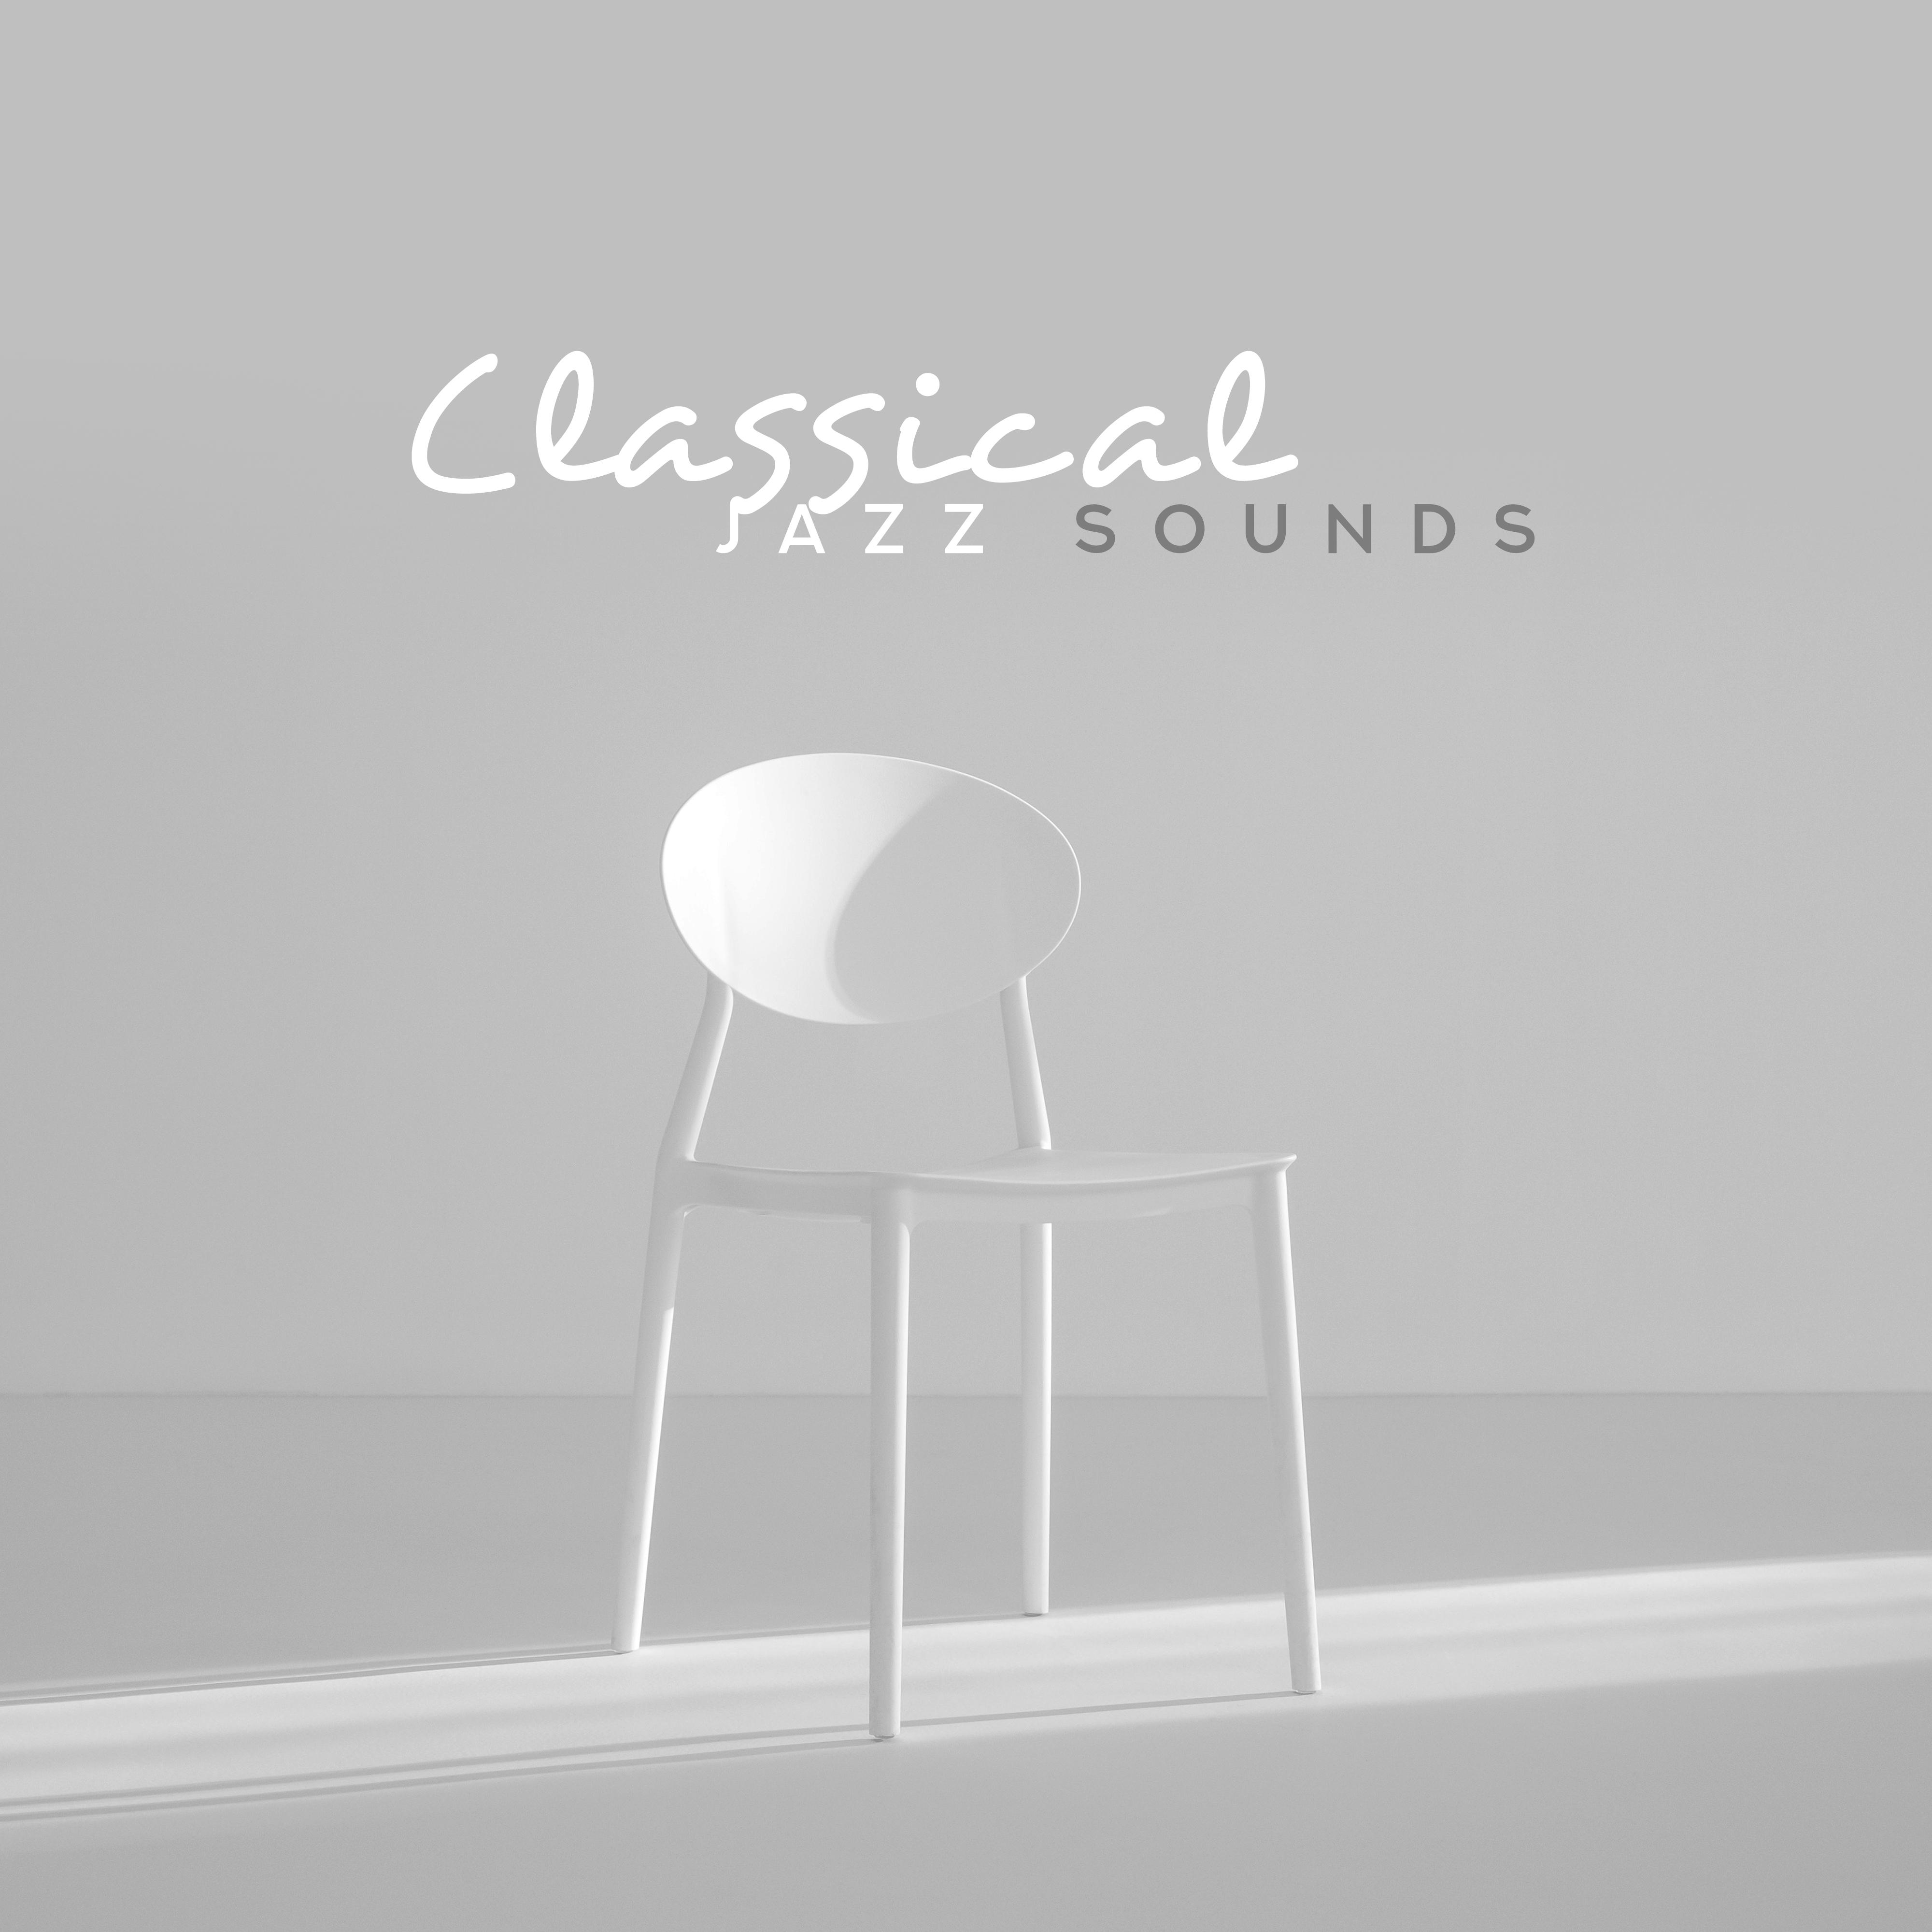 Classical Jazz Sounds – Instrumental Jazz Music Ambient